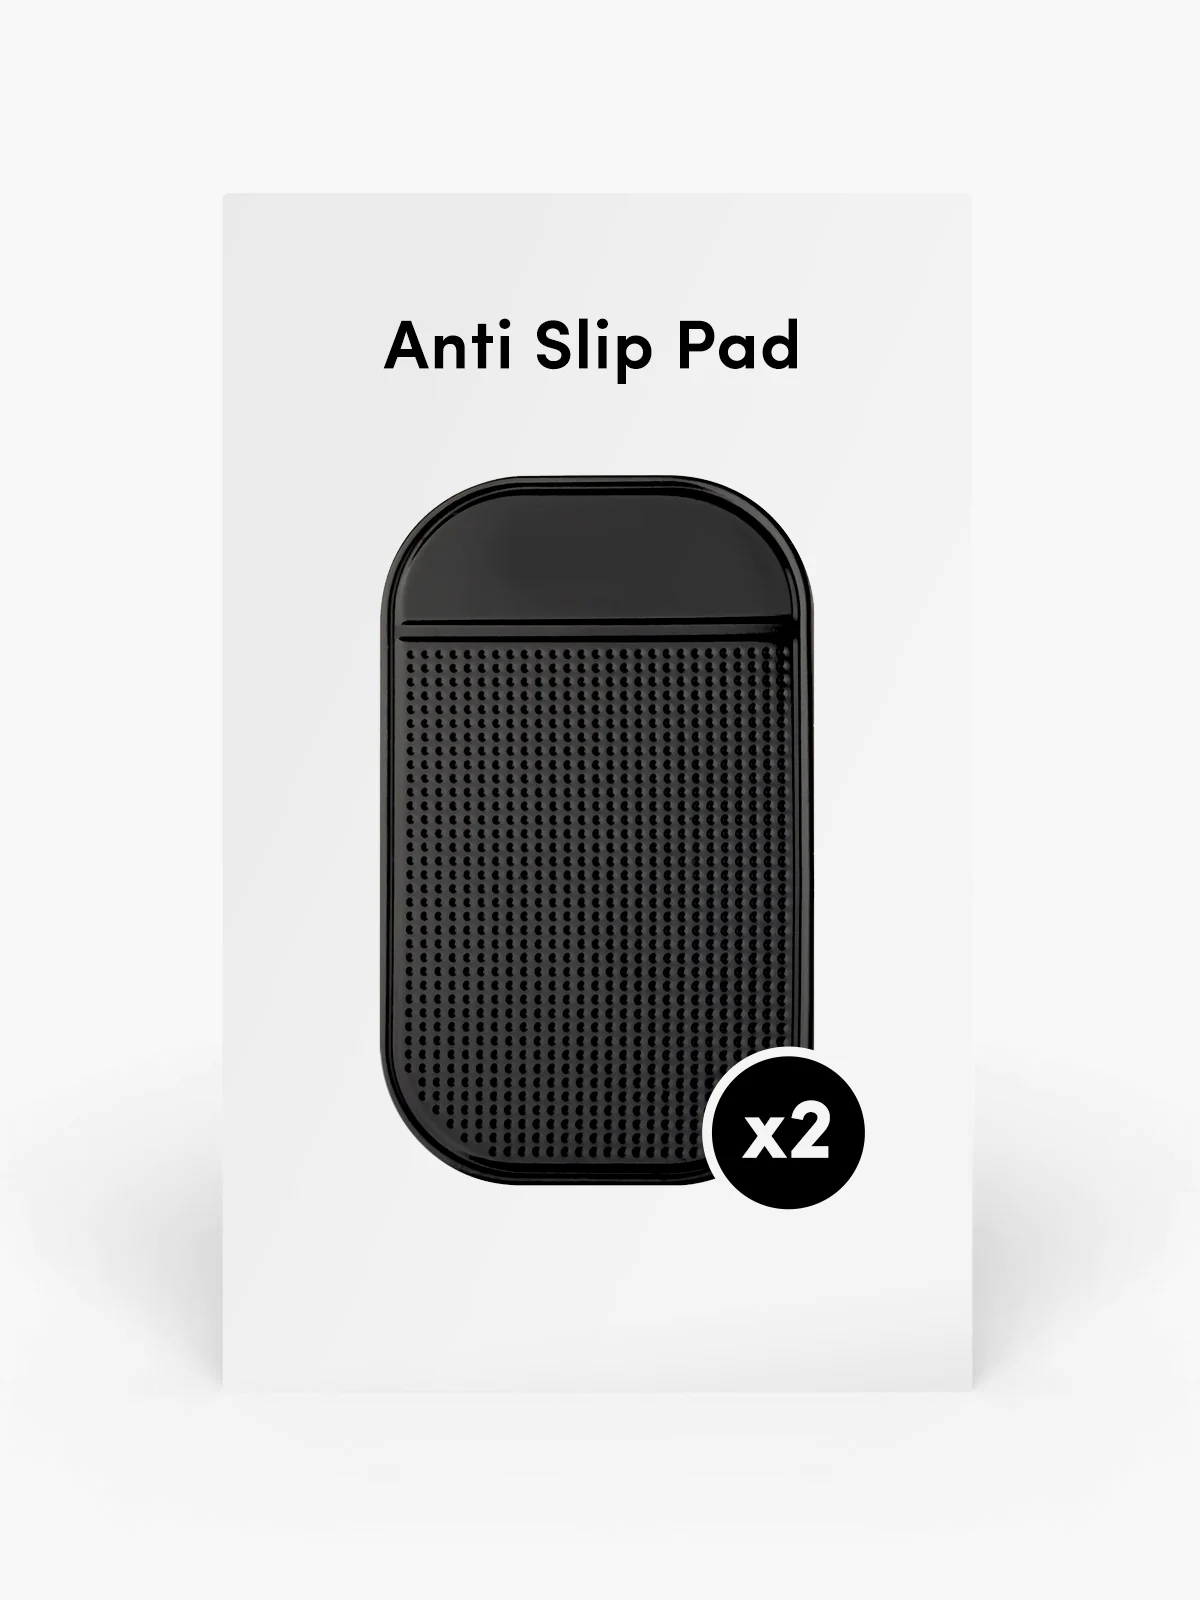 Anti Slip pad